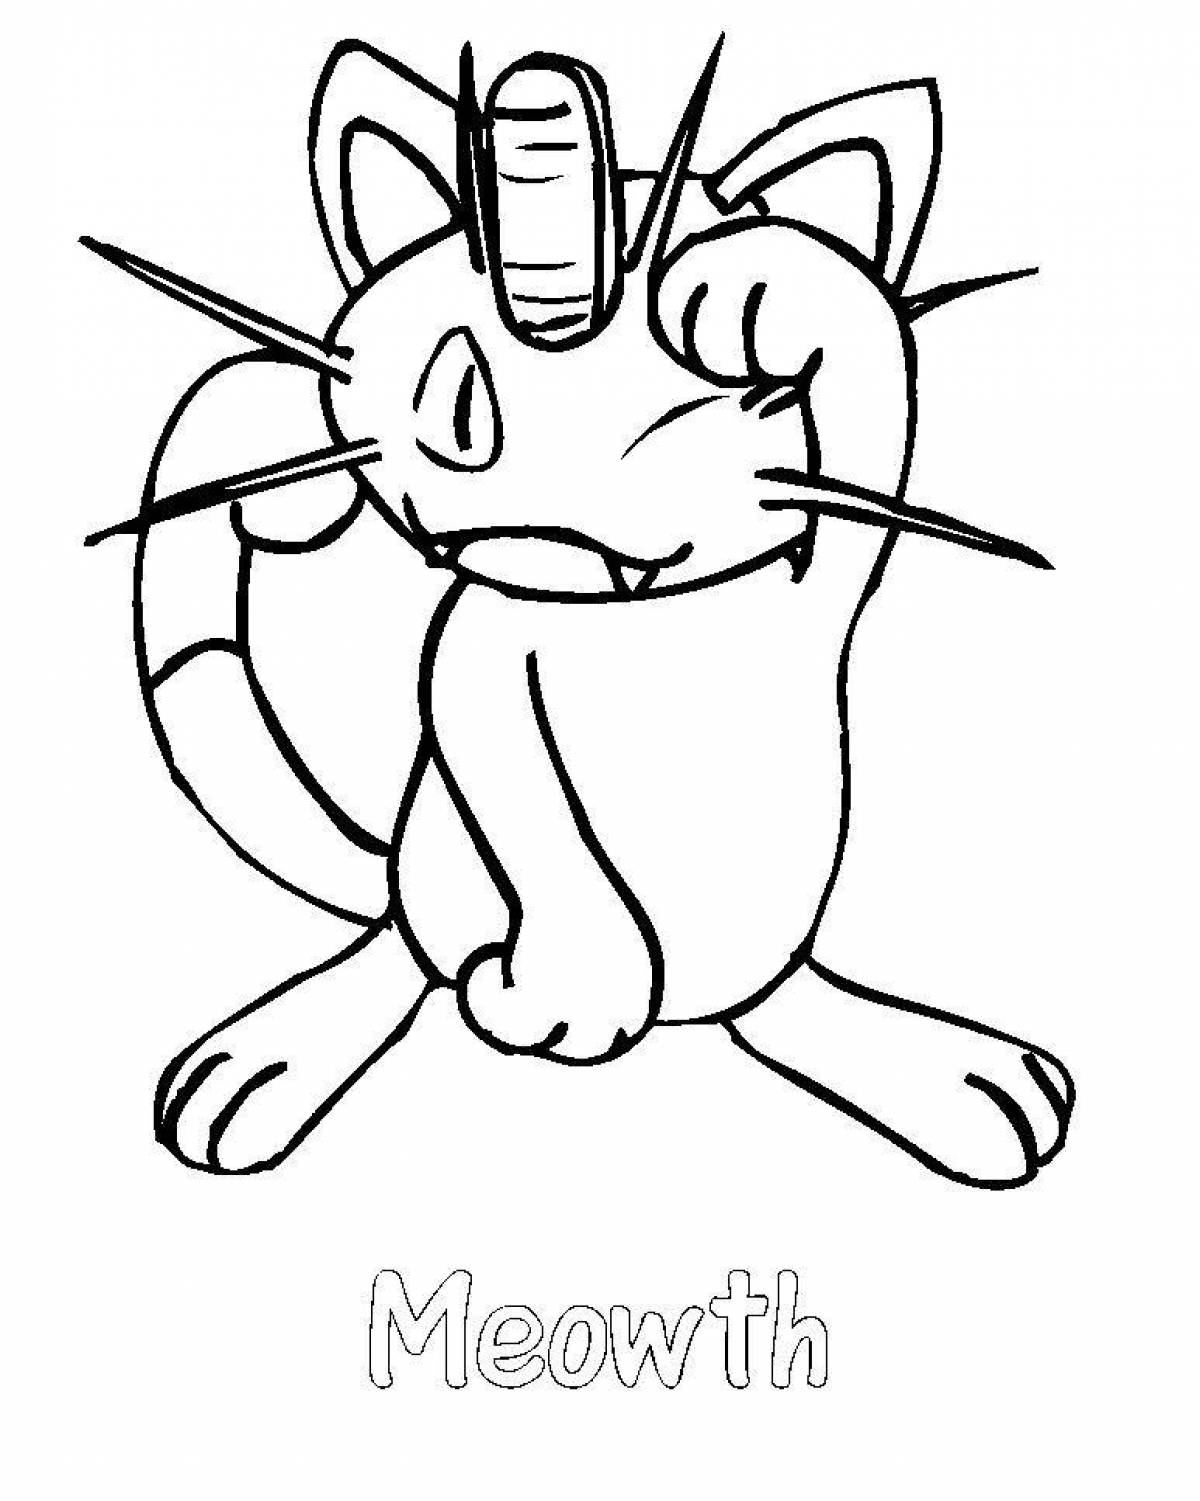 Bubble meowth coloring page